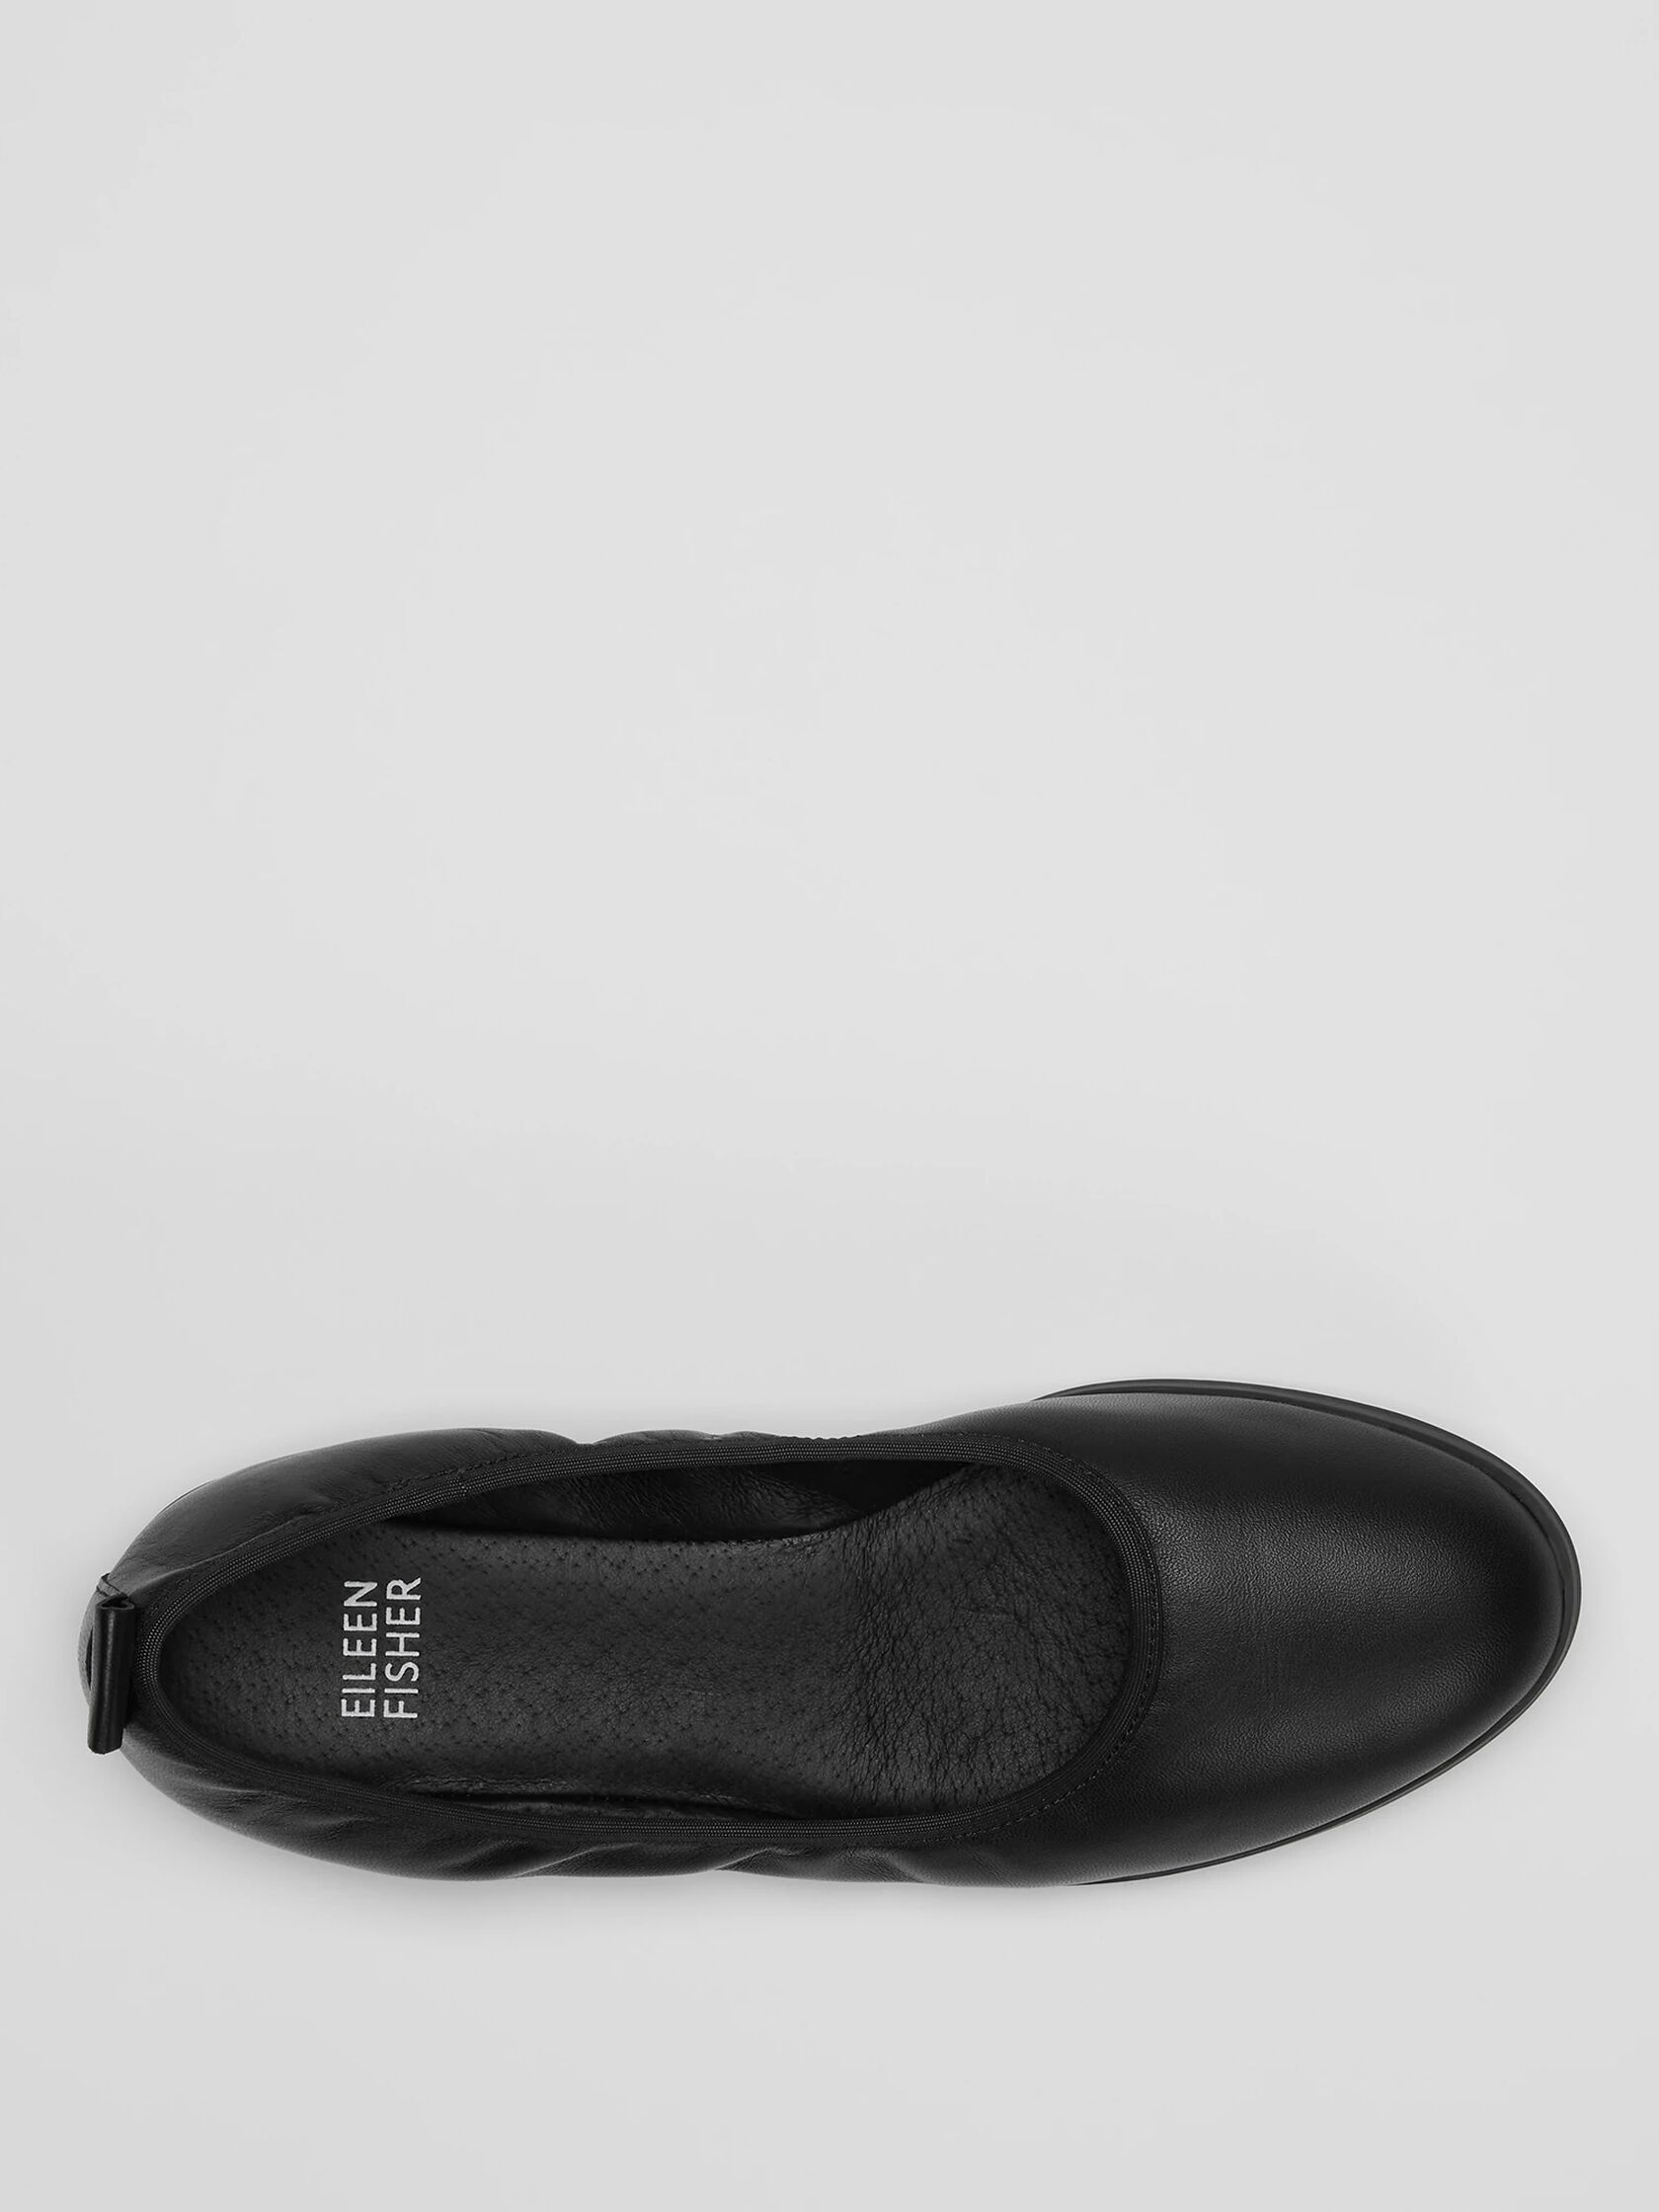 Notion Nappa Leather Ballet Flat